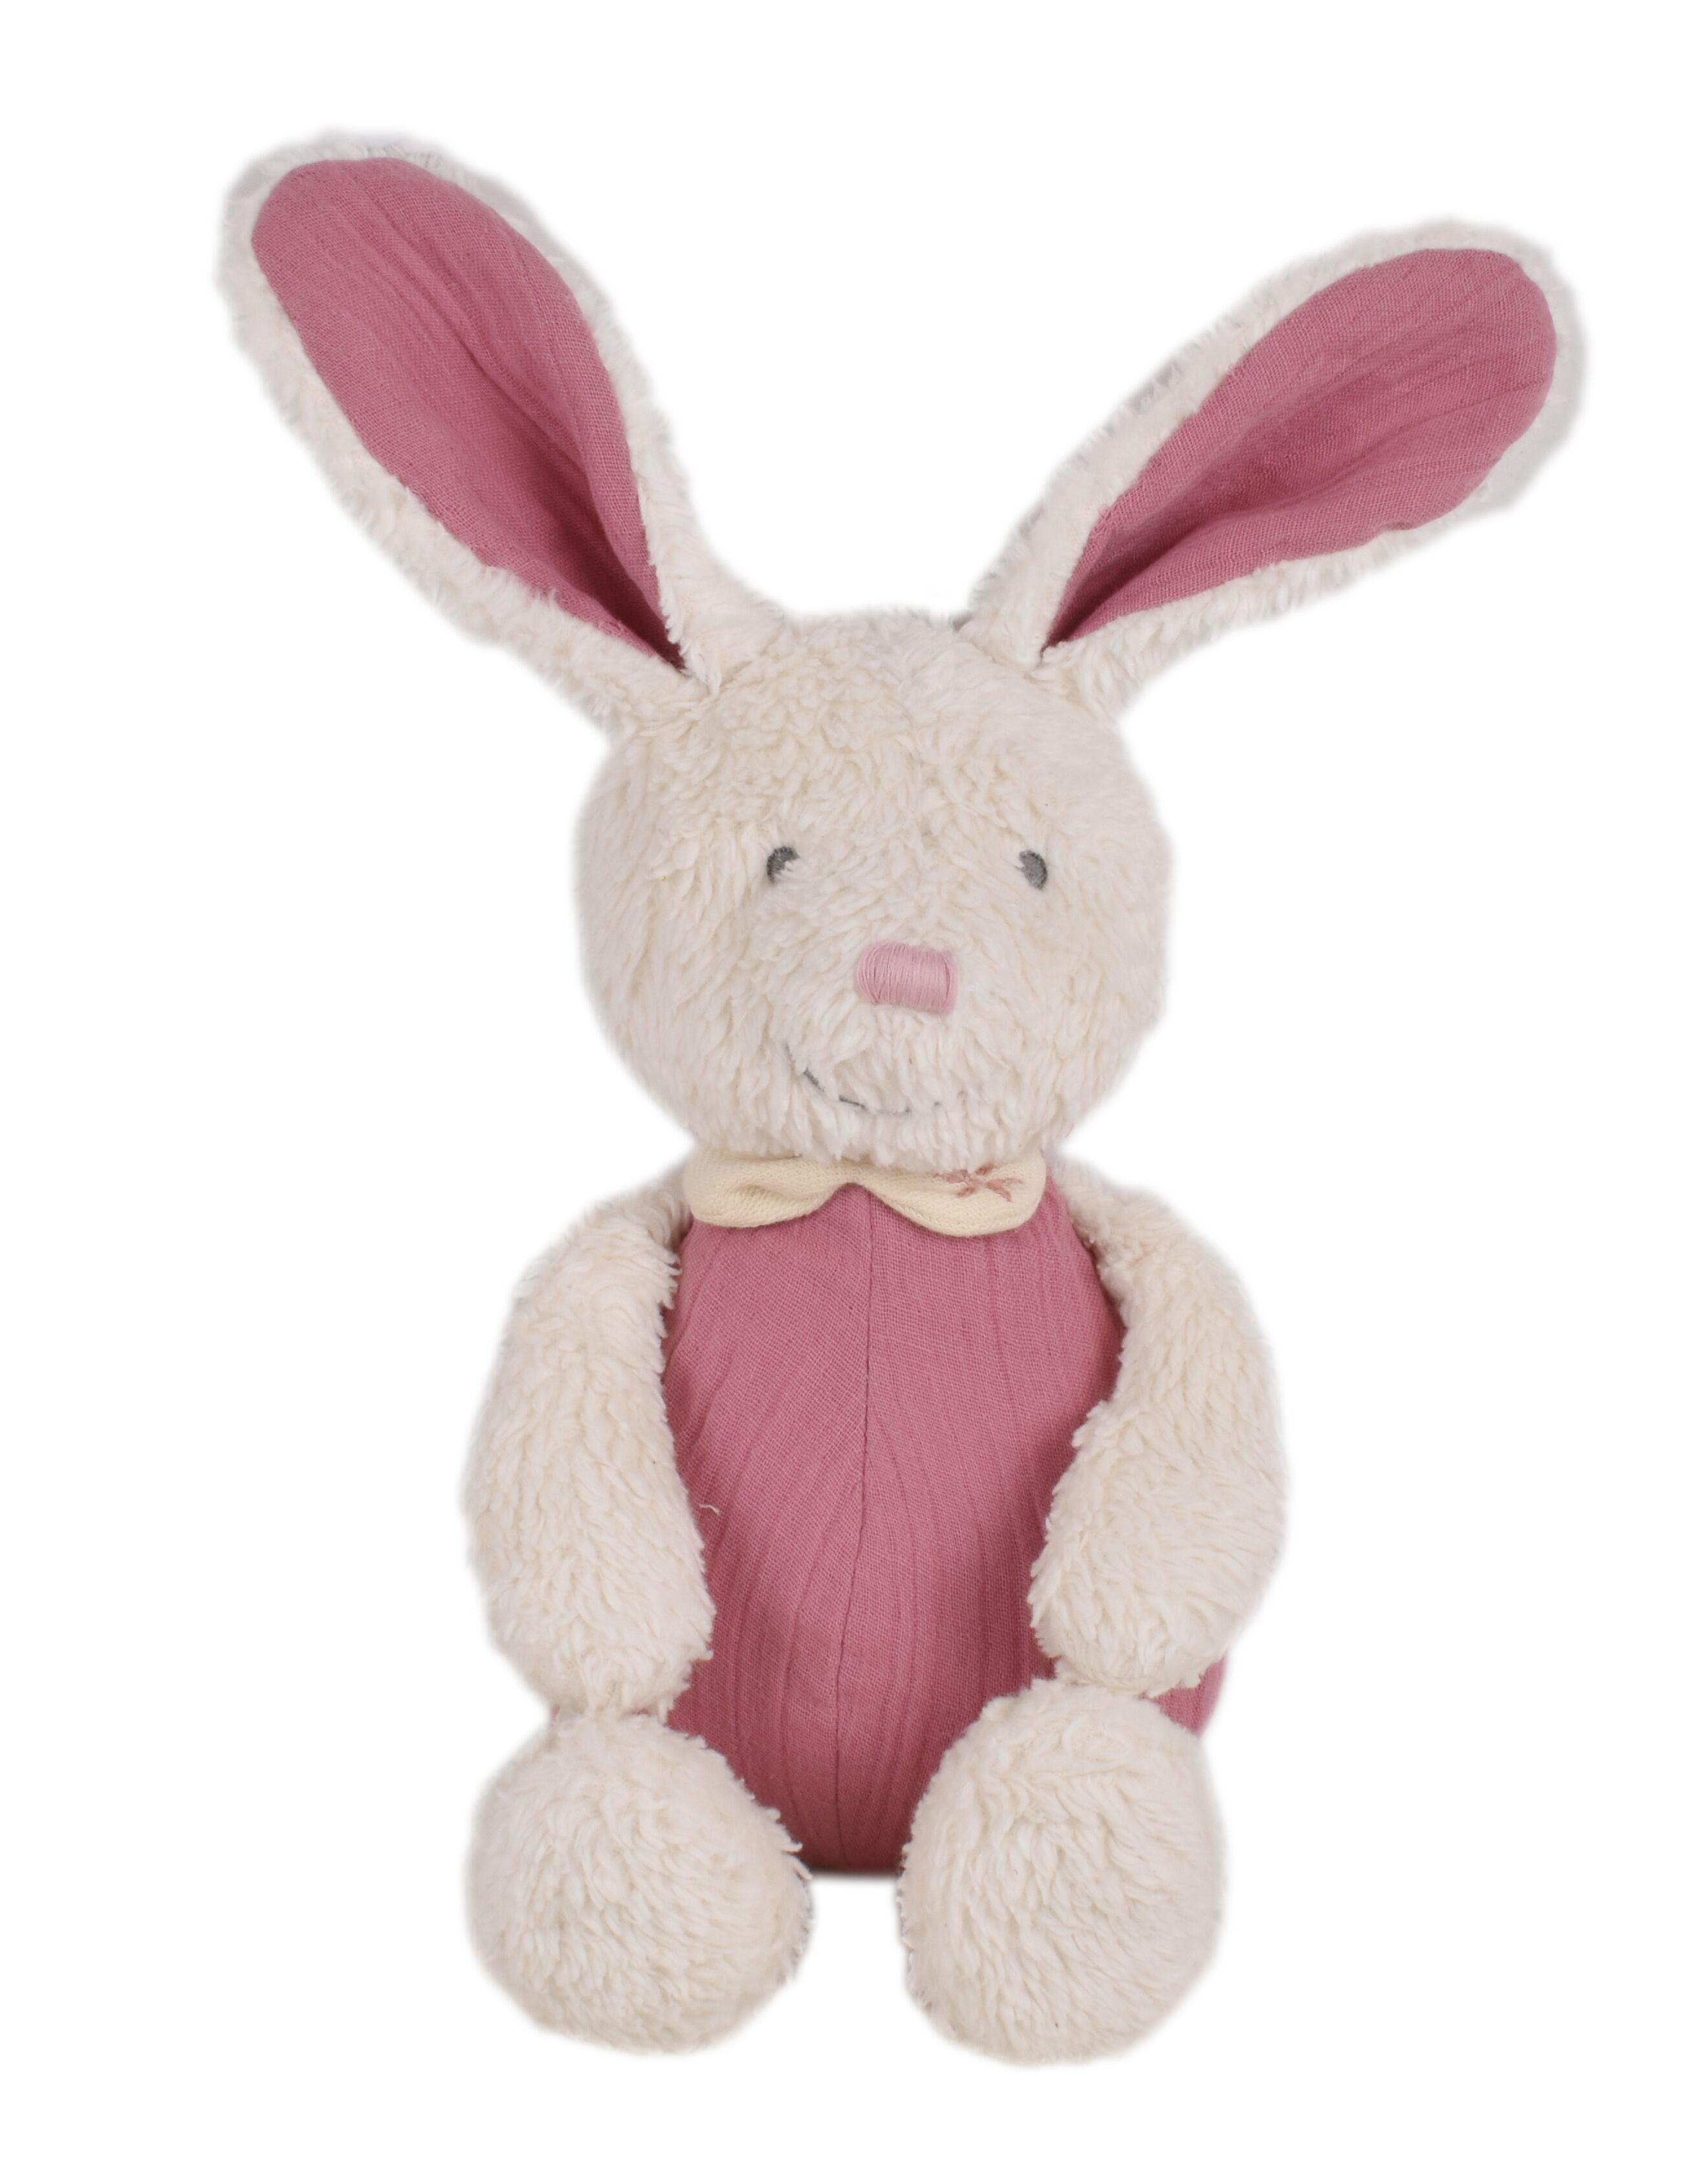 100% Organic Baby Bunny Plush Toy with Muslin Body 30cm - Taylorson